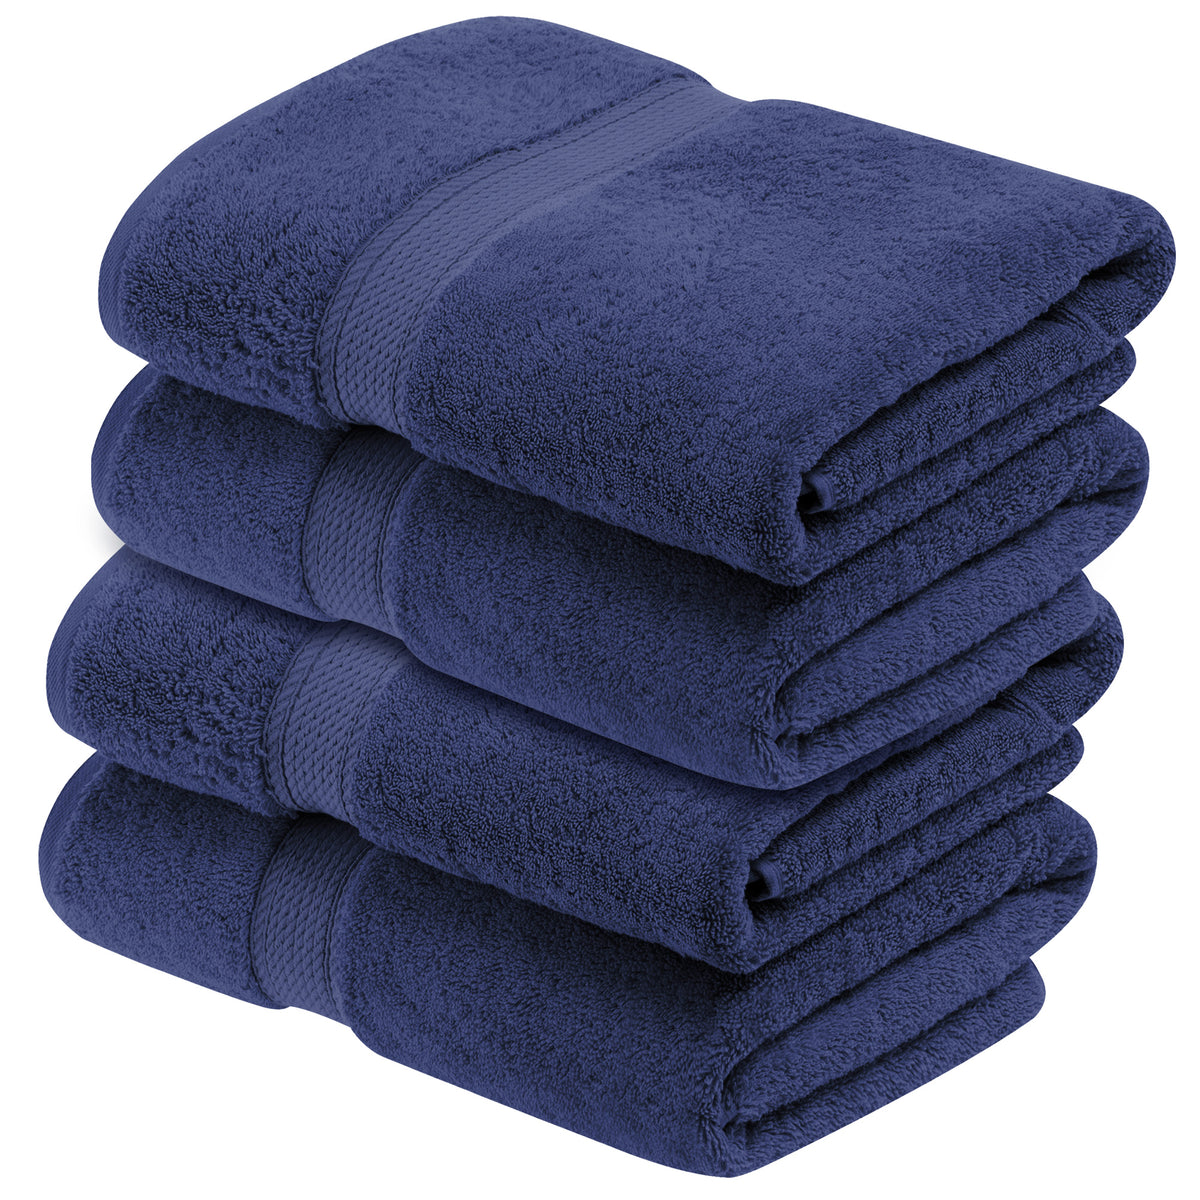 Ziorca Superior Herringbone Bath Towel 100% cotton long staple